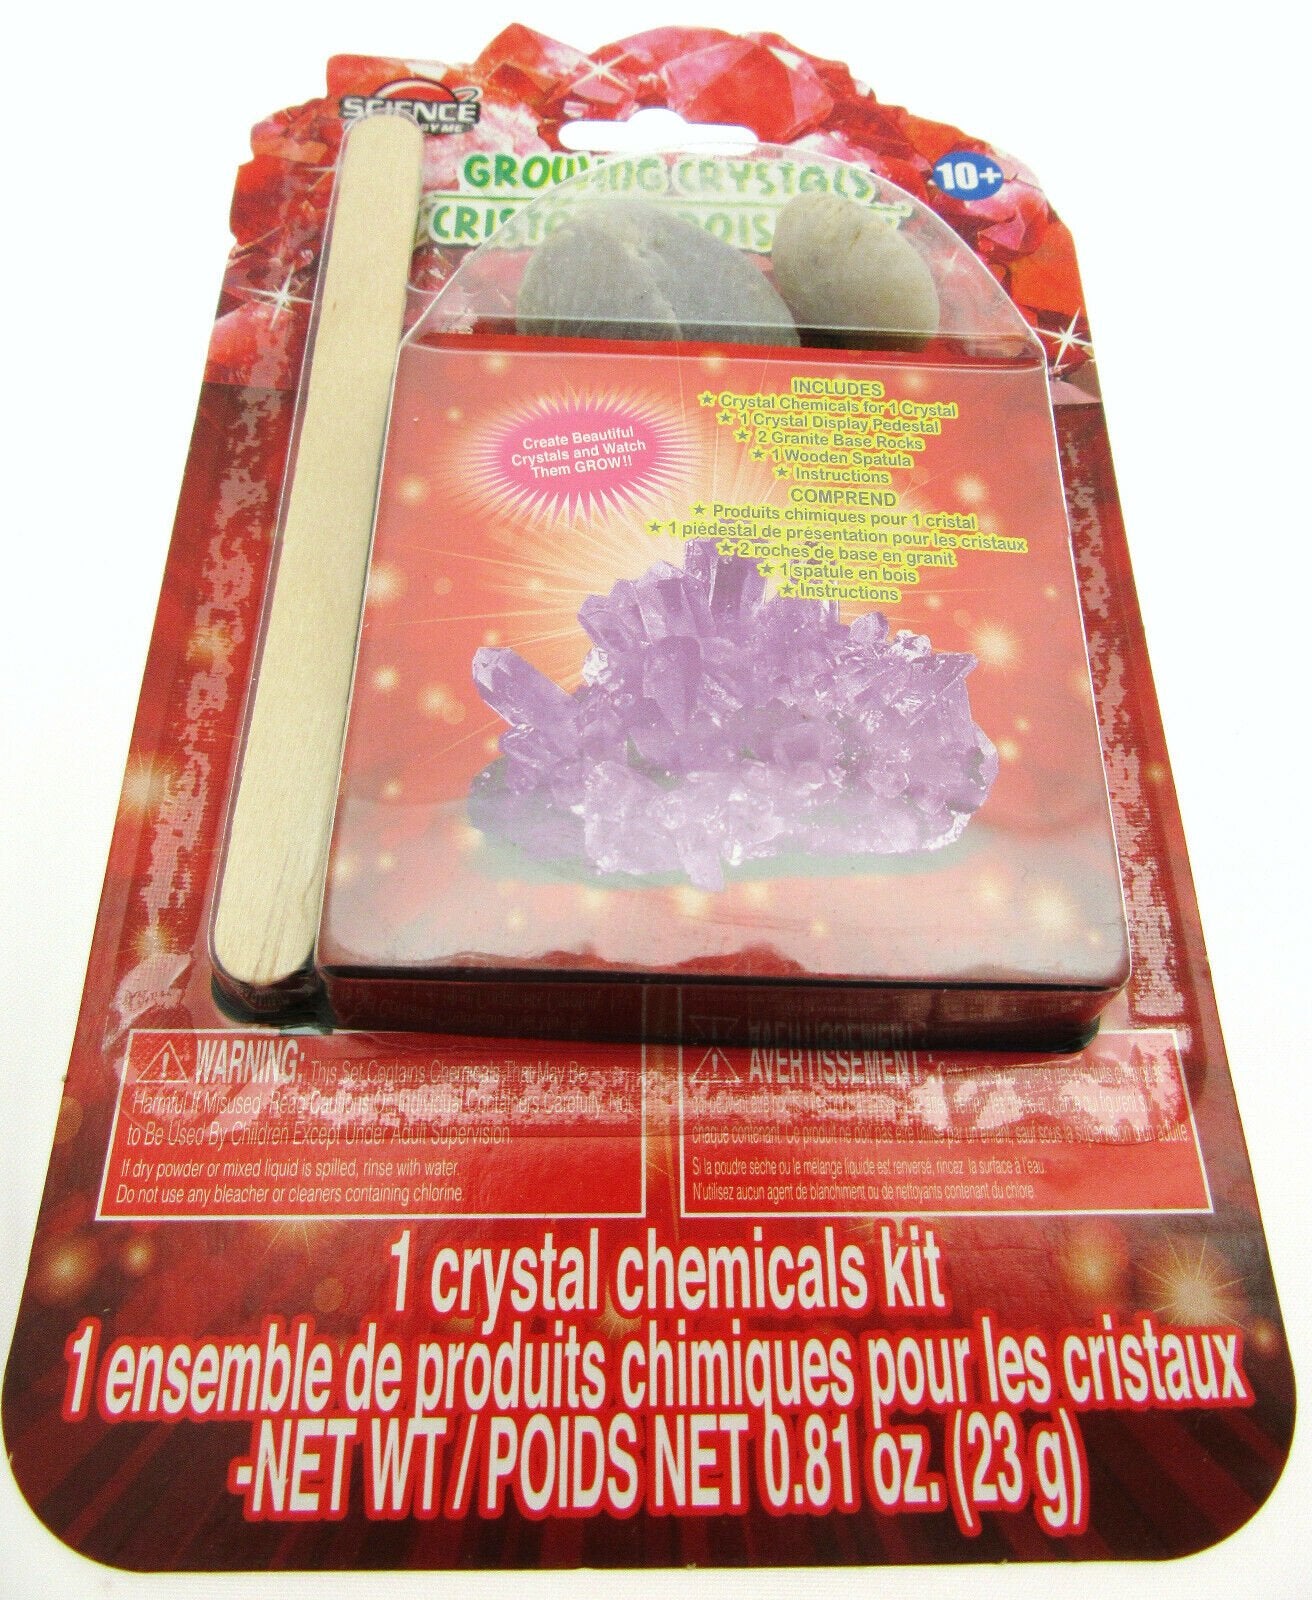 Growing Crystals ~ Cristaux Croissants ~ 3 Pack